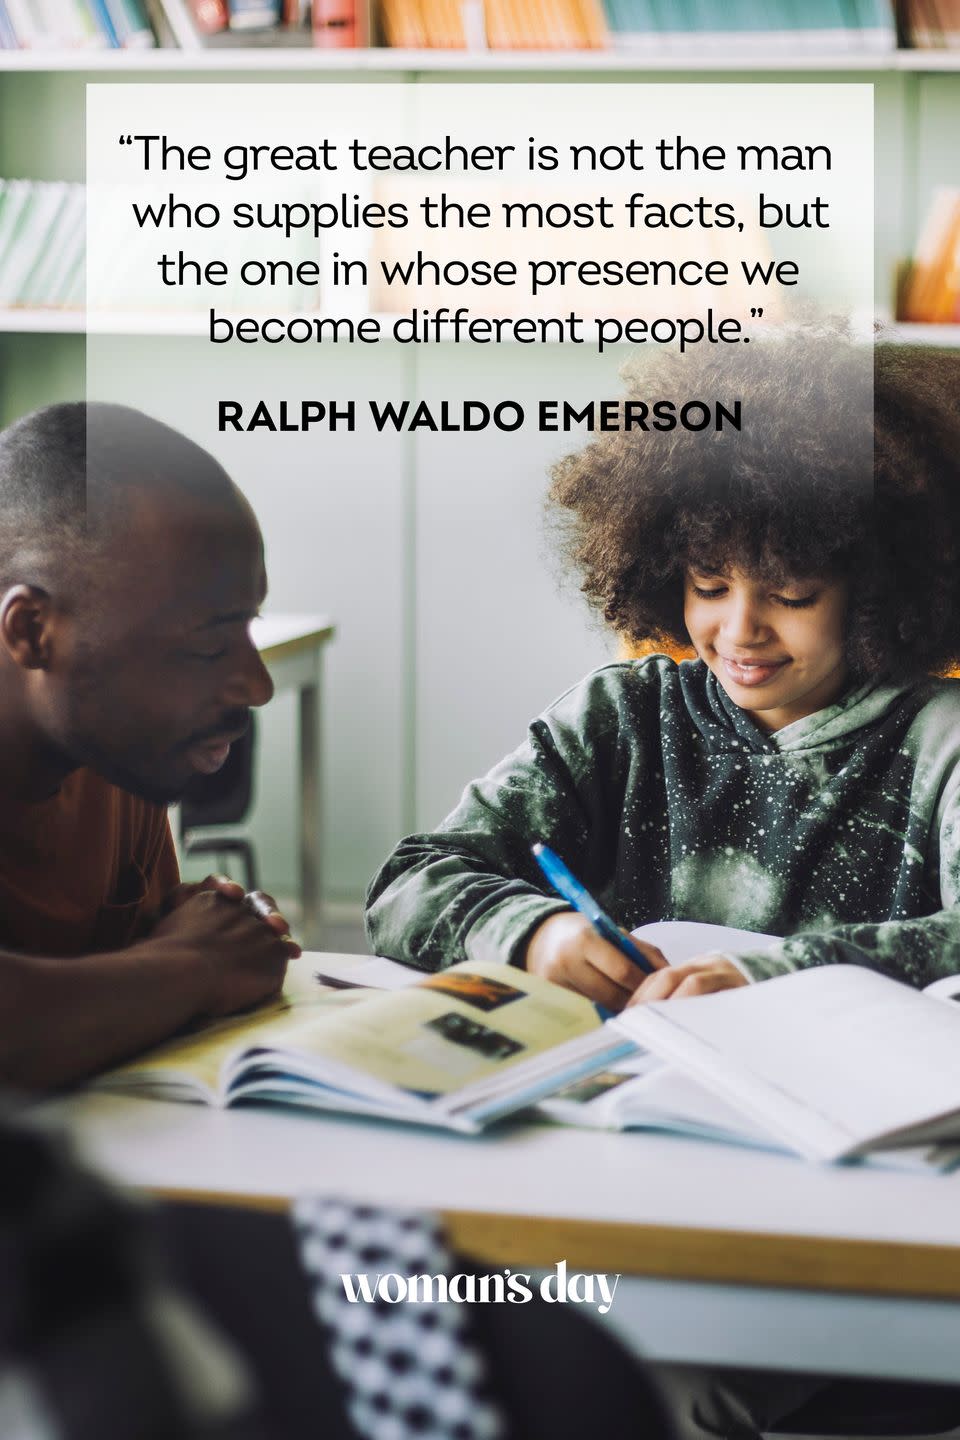 5) Ralph Waldo Emerson